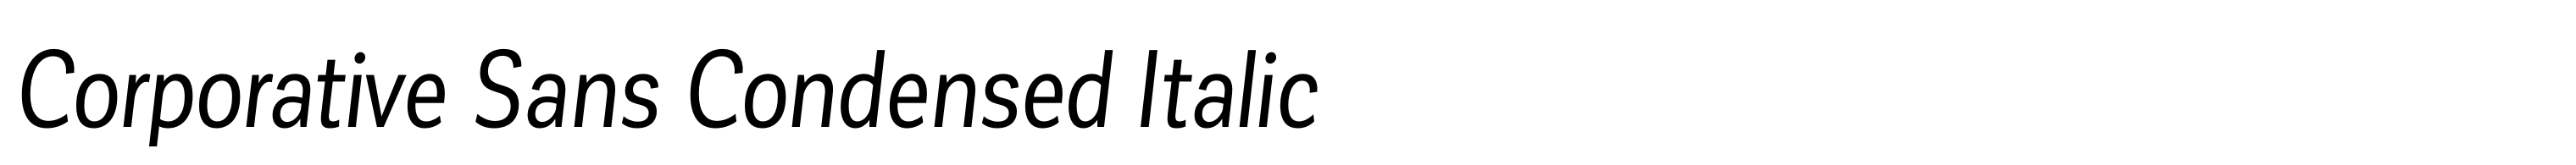 Corporative Sans Condensed Italic